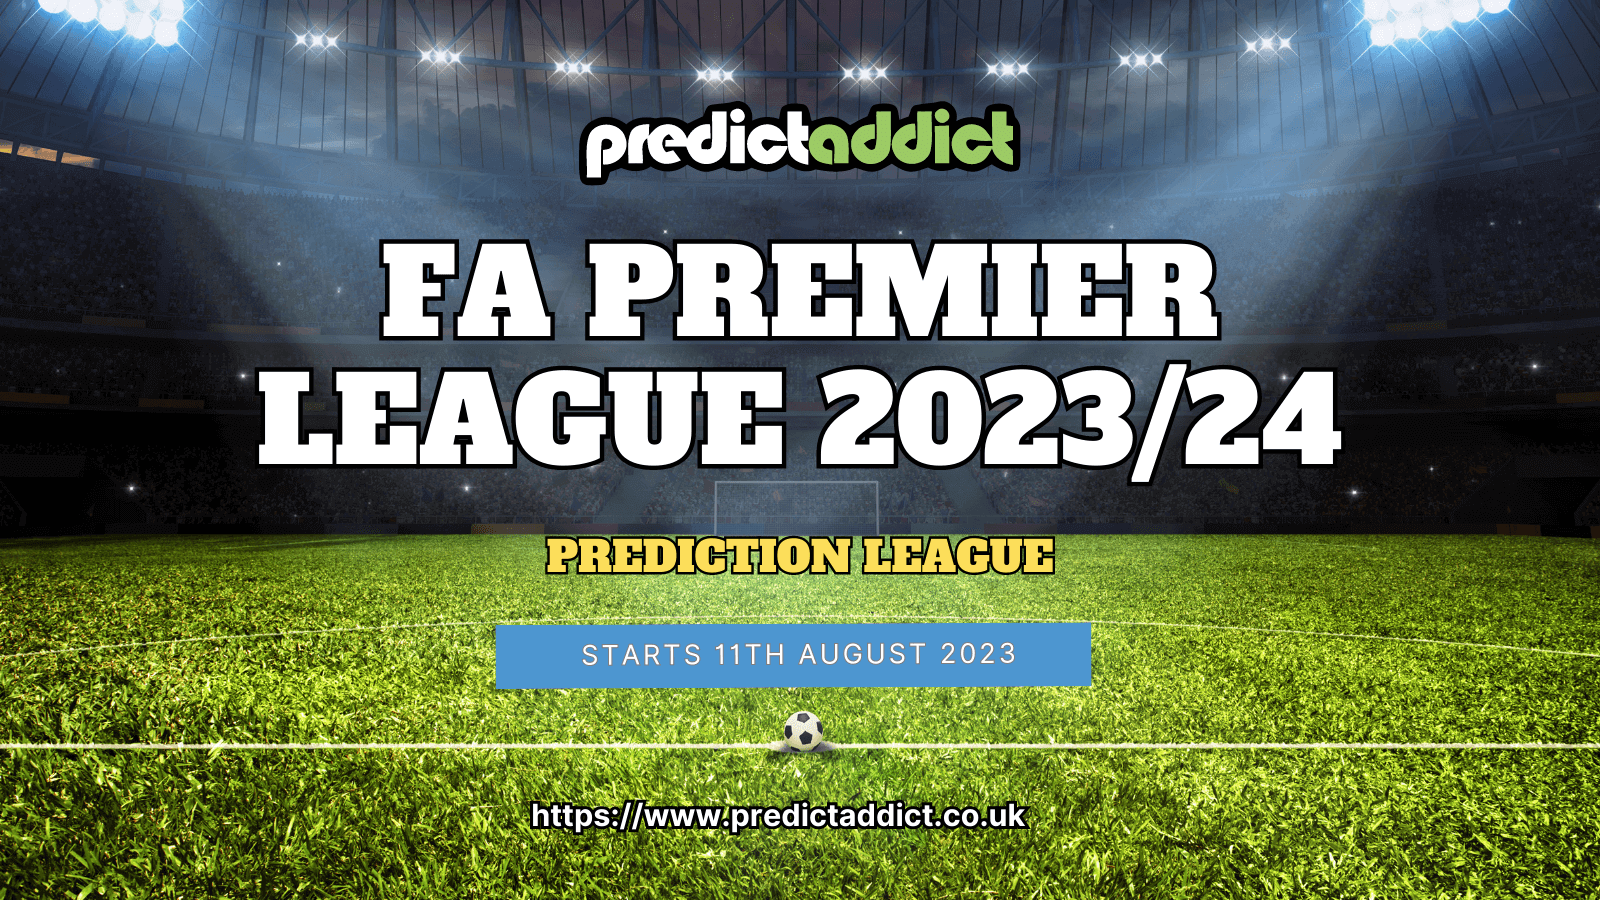 Half of a football pitch surrounding the announcement of Predict Addict's FA Premier League 2023/24 prediction league